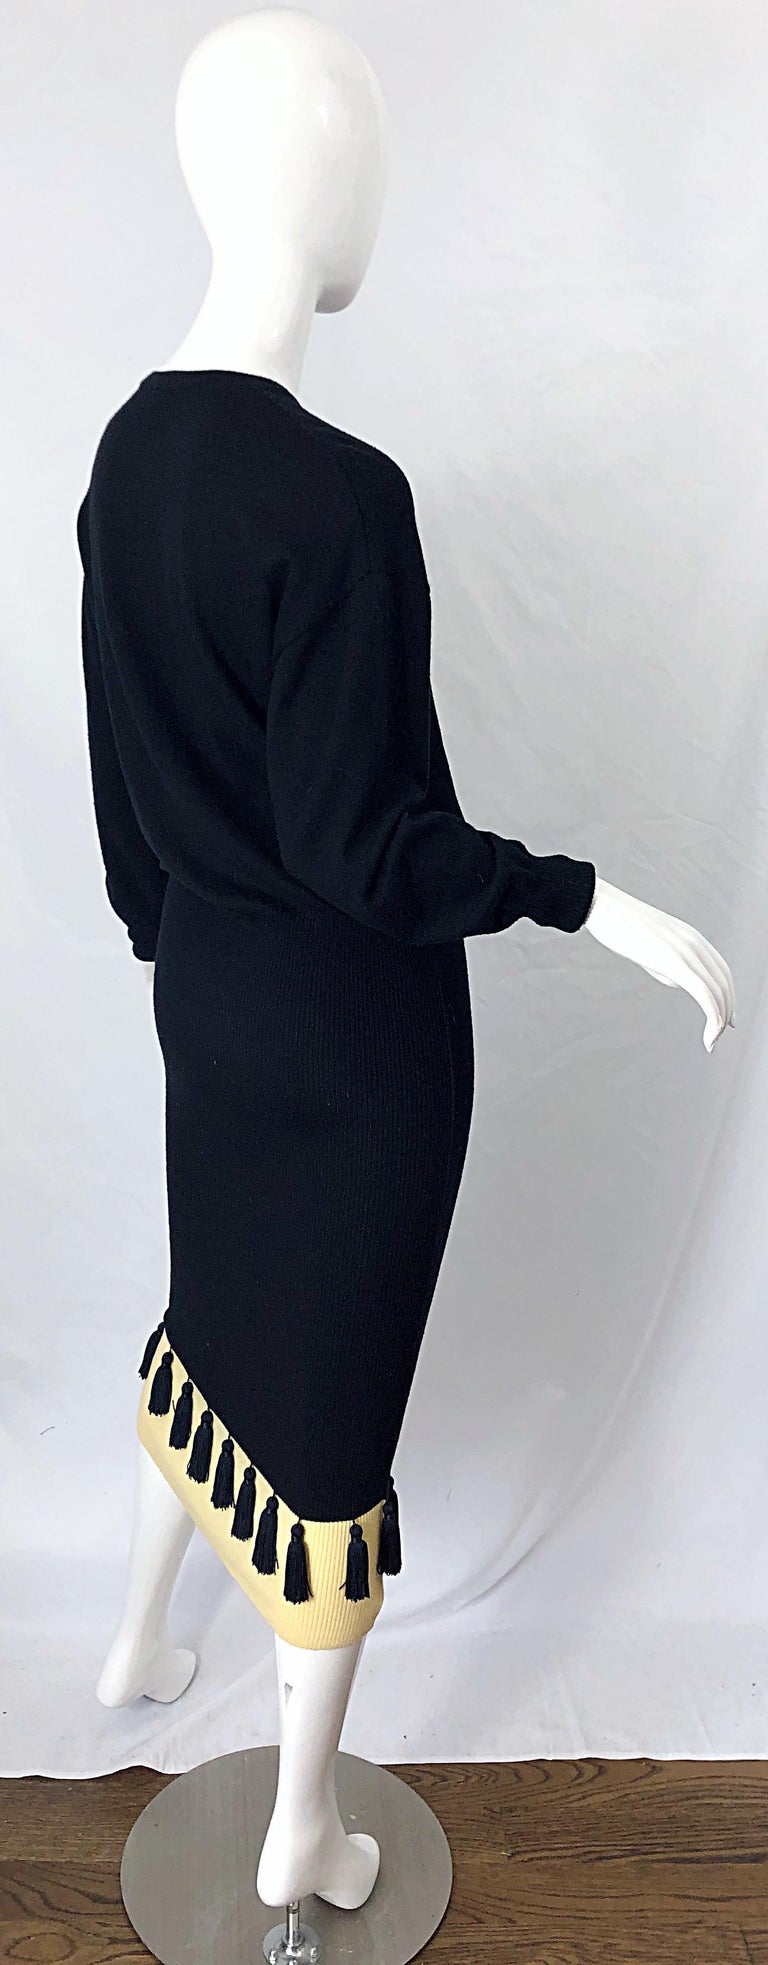 Women's 1980s Angelo Tarlazzi Black and Ivory Wool Dolman Sleeve 80s Sweater Dress For Sale